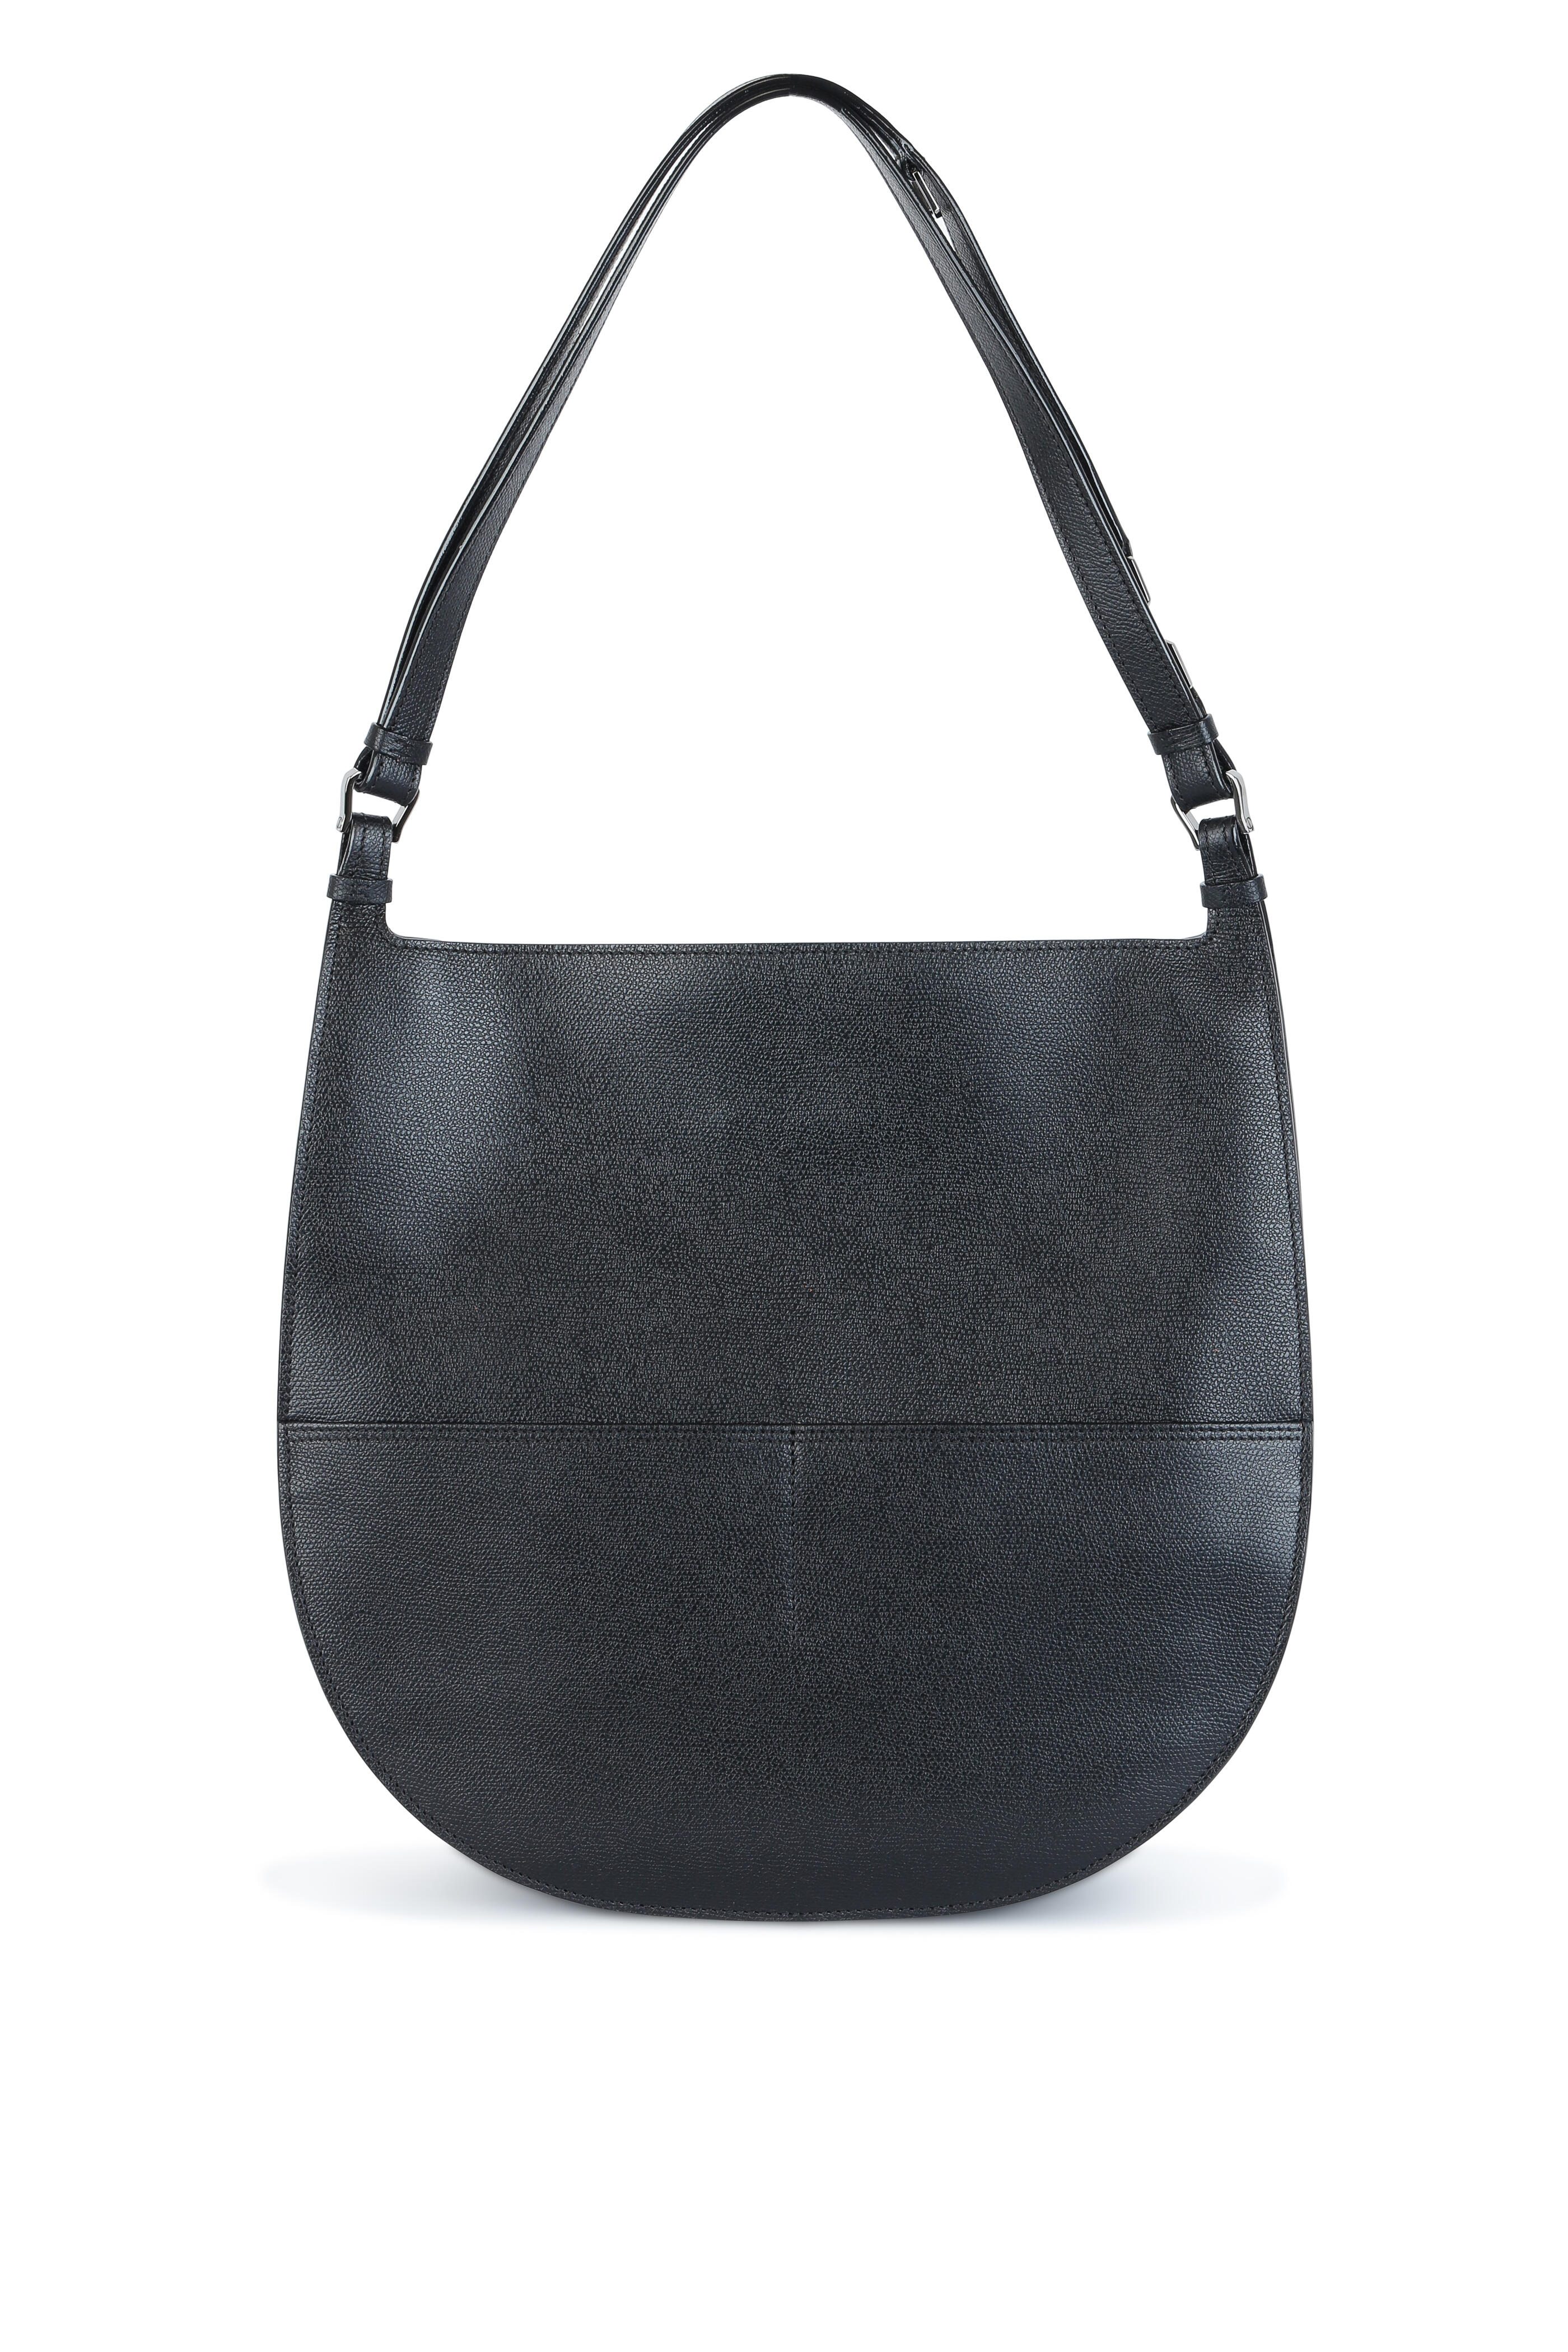 Slouchy Tote BLACK Shoulder Bag Hobo Leather Bag Weekender 